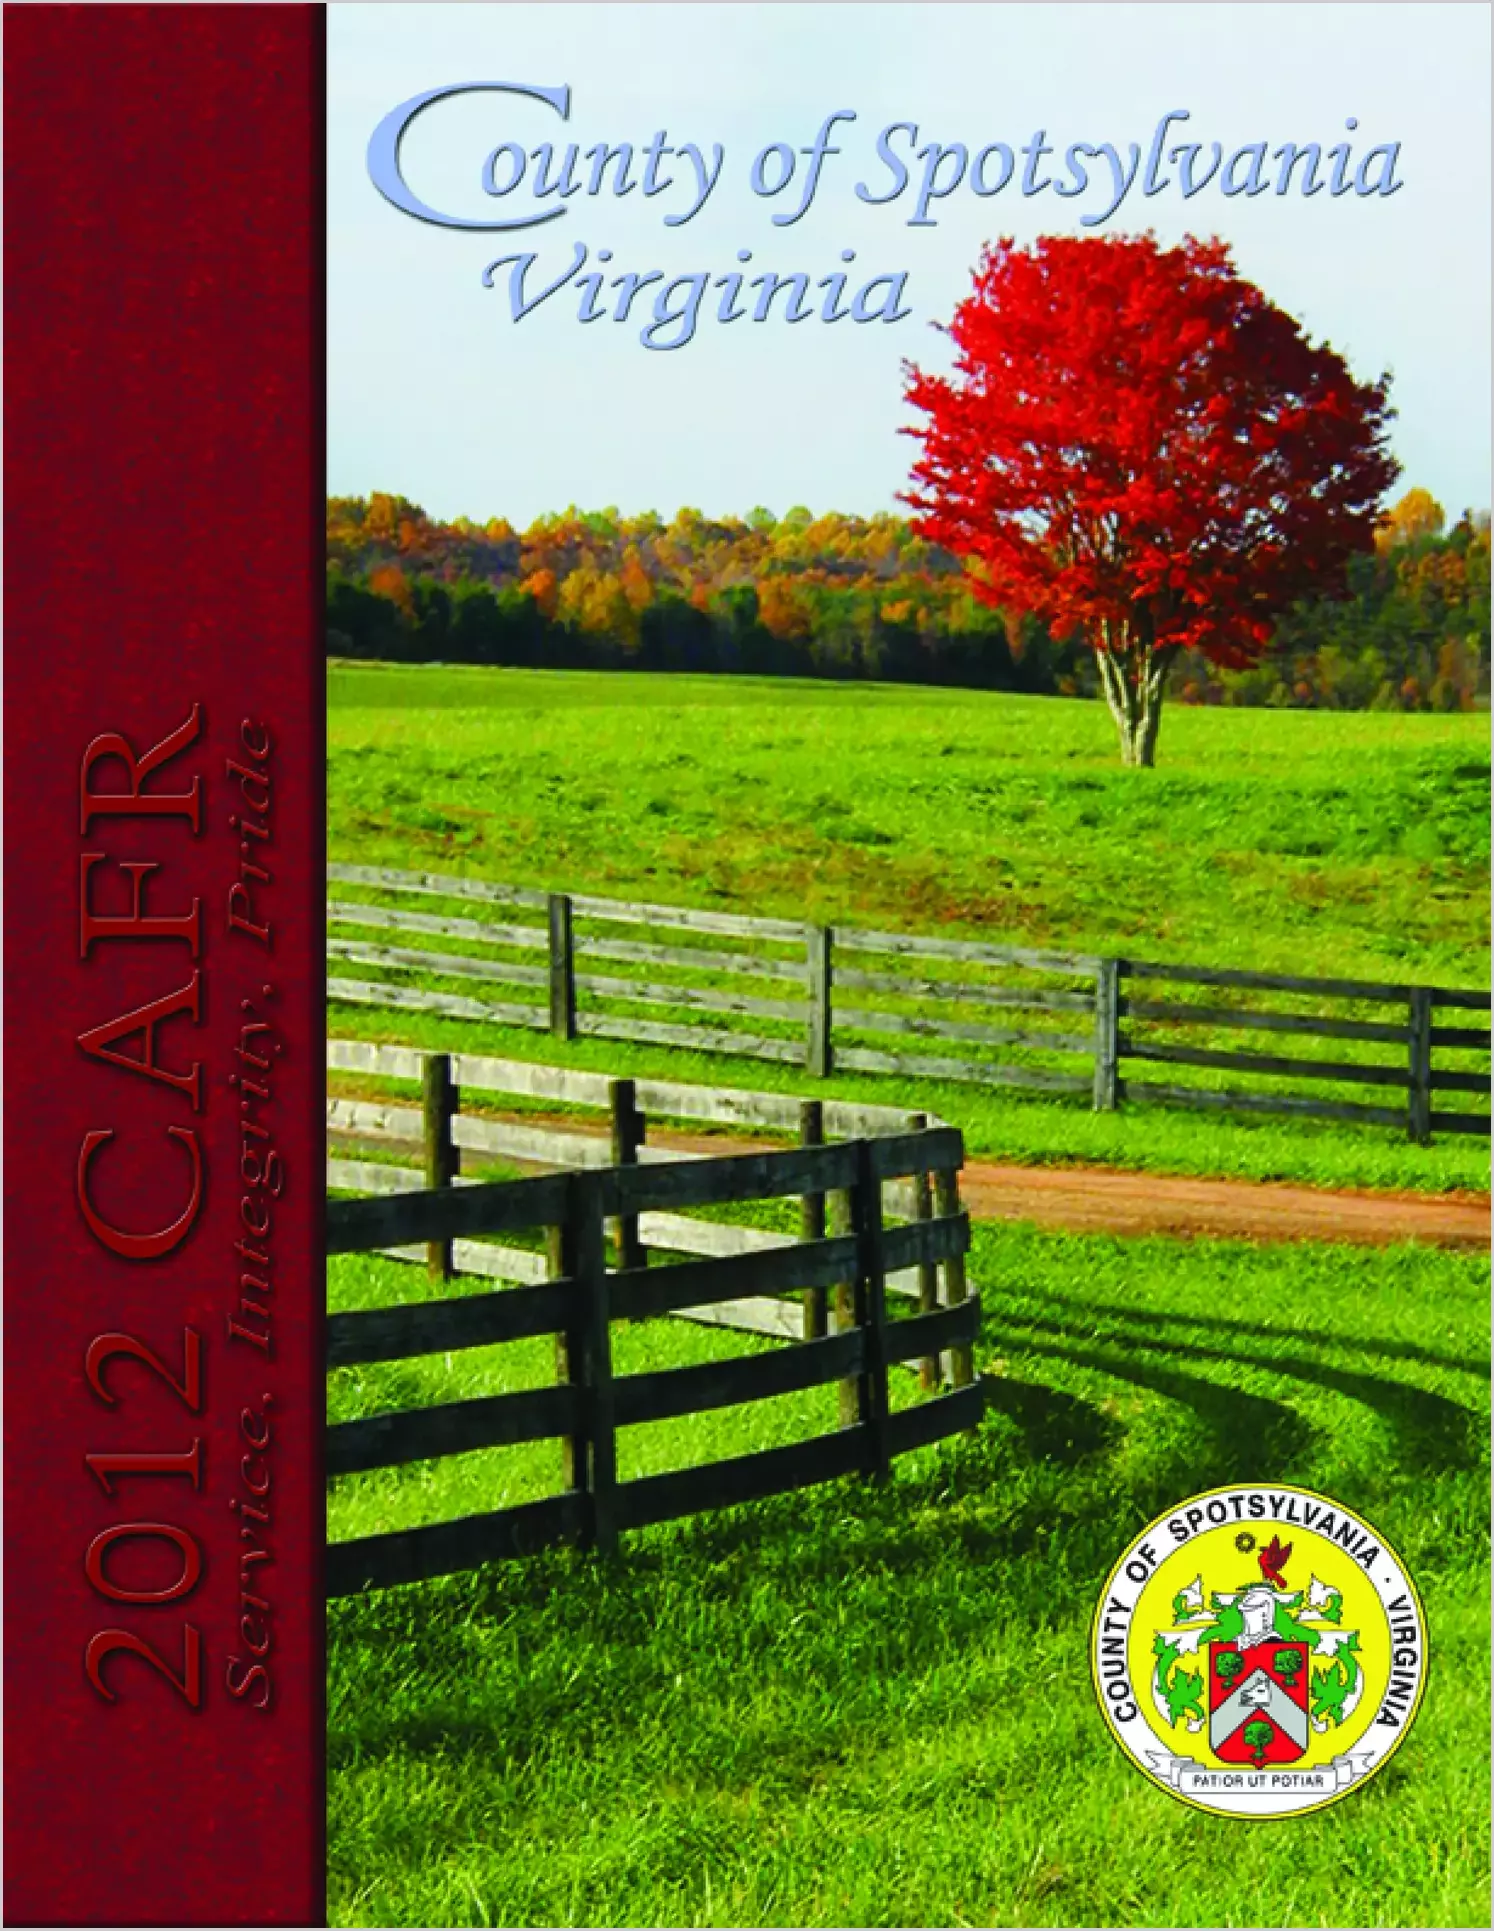 2012 Annual Financial Report for County of Spotsylvania